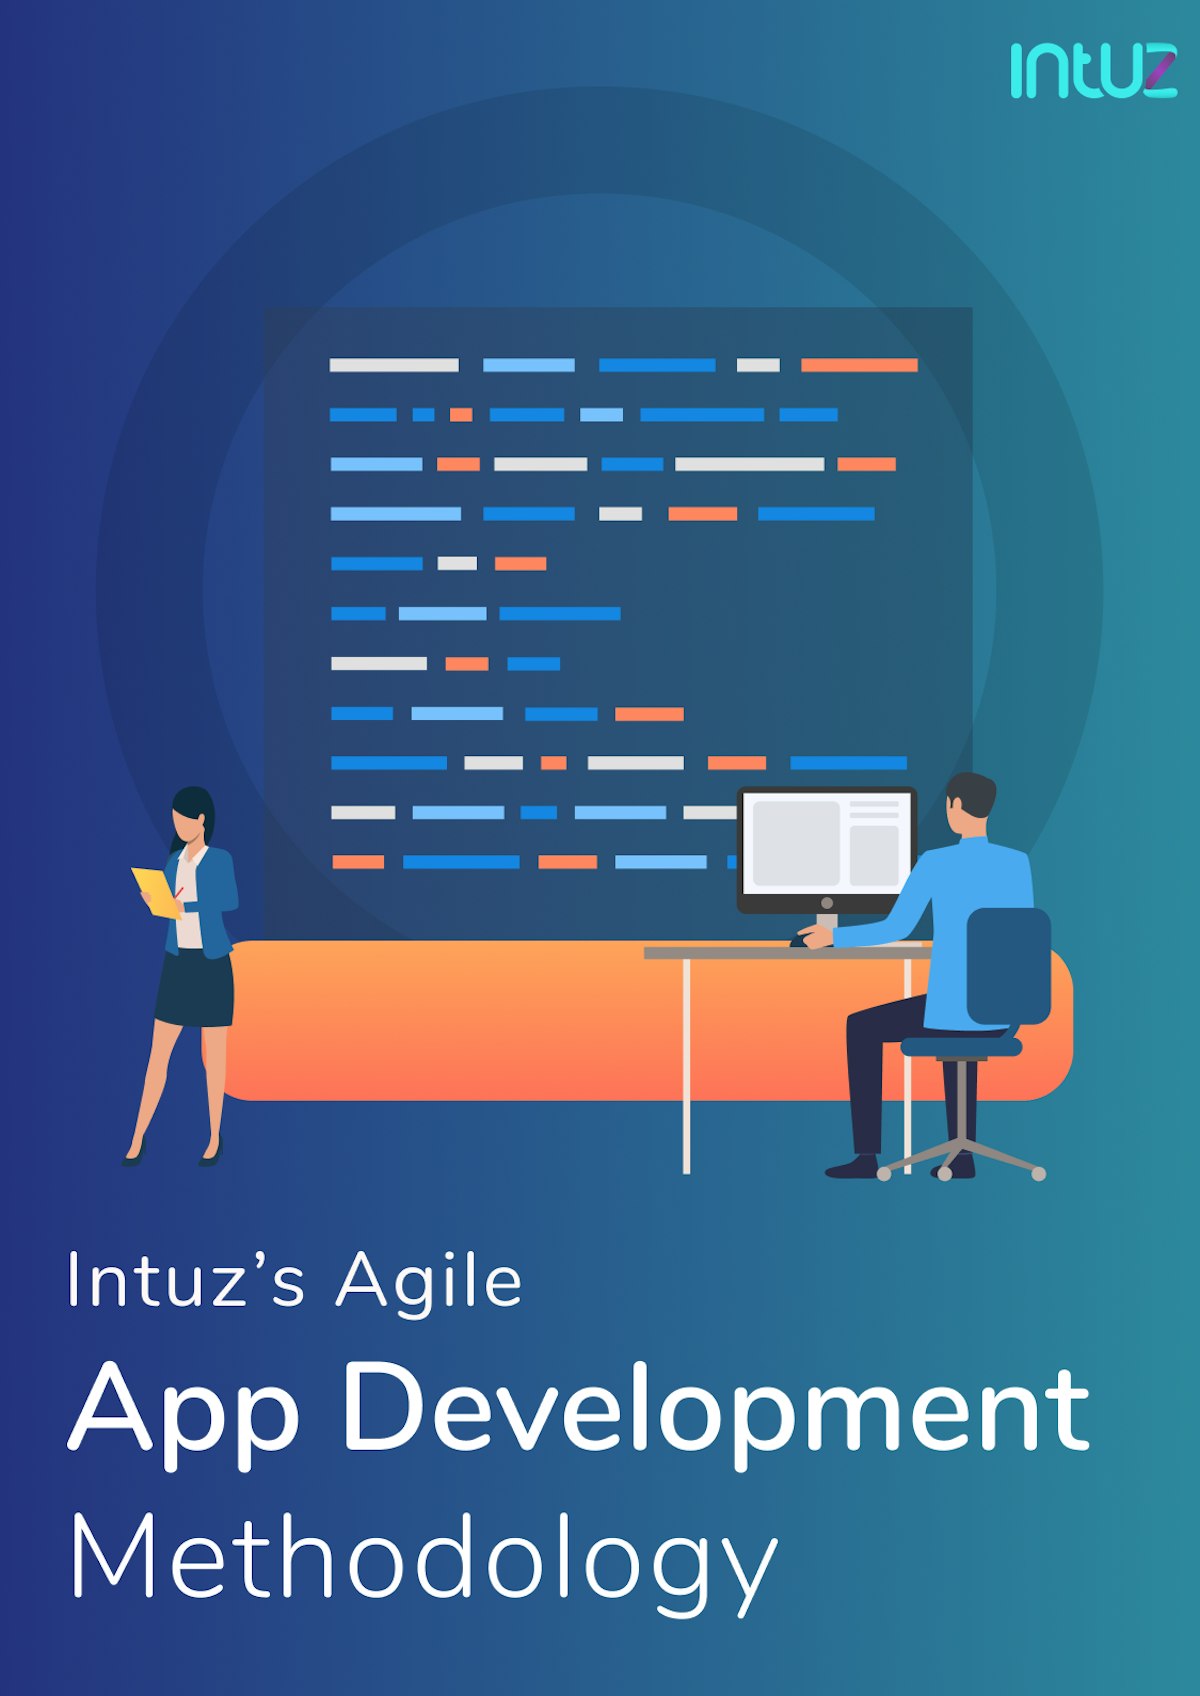  Intuz Agile App Development Methodology - Guide 